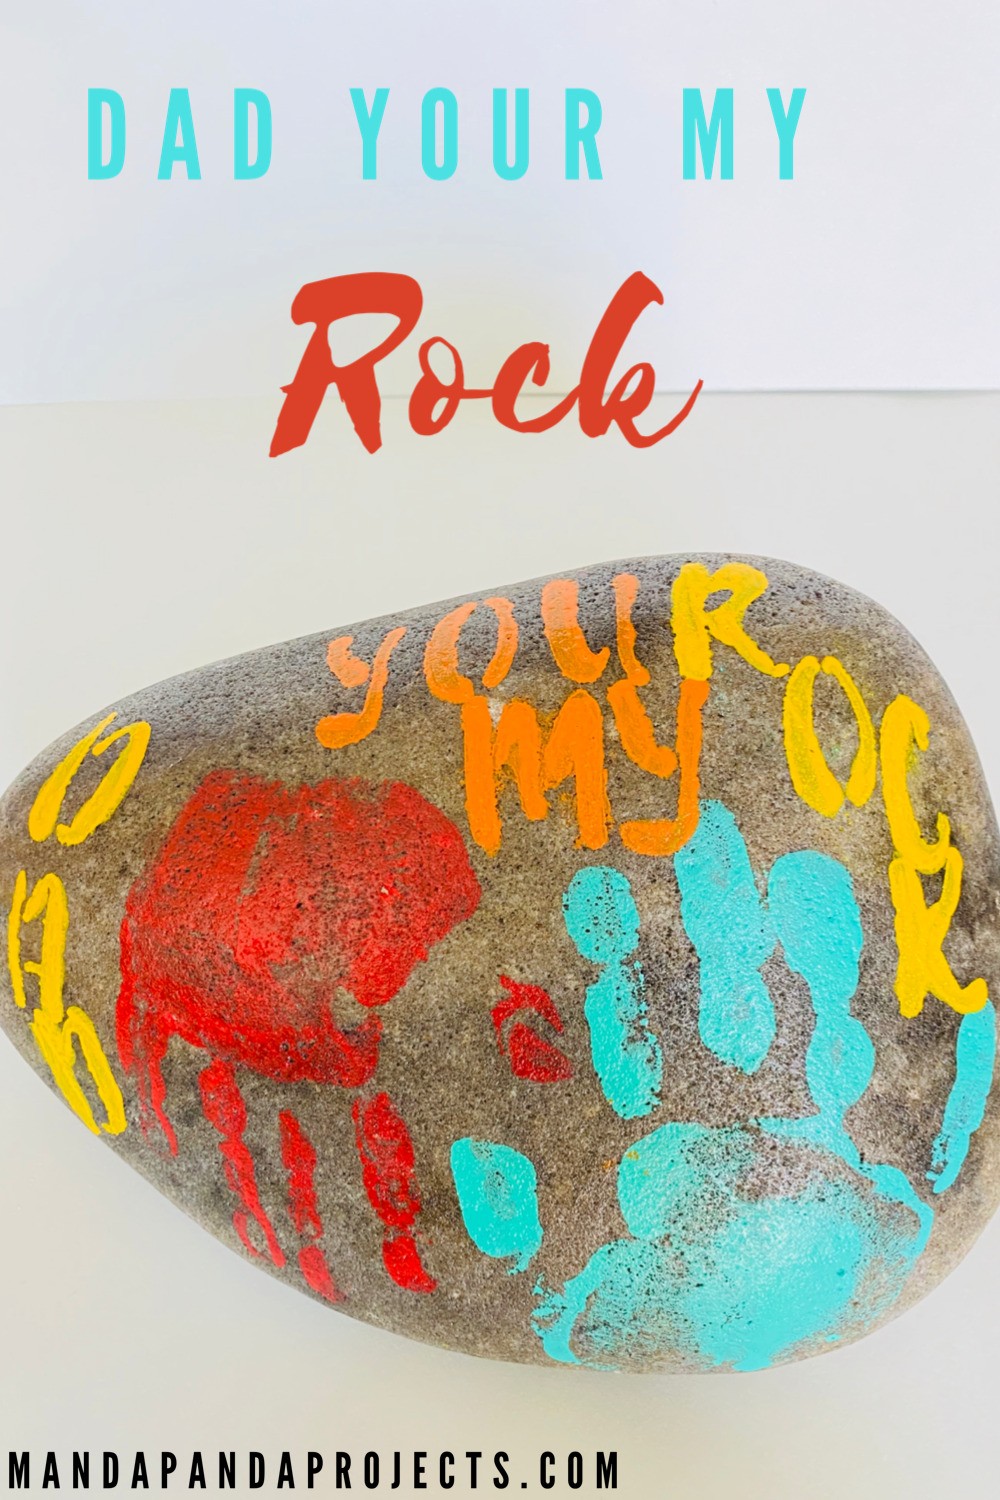 Dad Your My Rock handmade doorstopper. Fathers day handmade gift #DIYFathersday #Kidsfathersdaycrafts